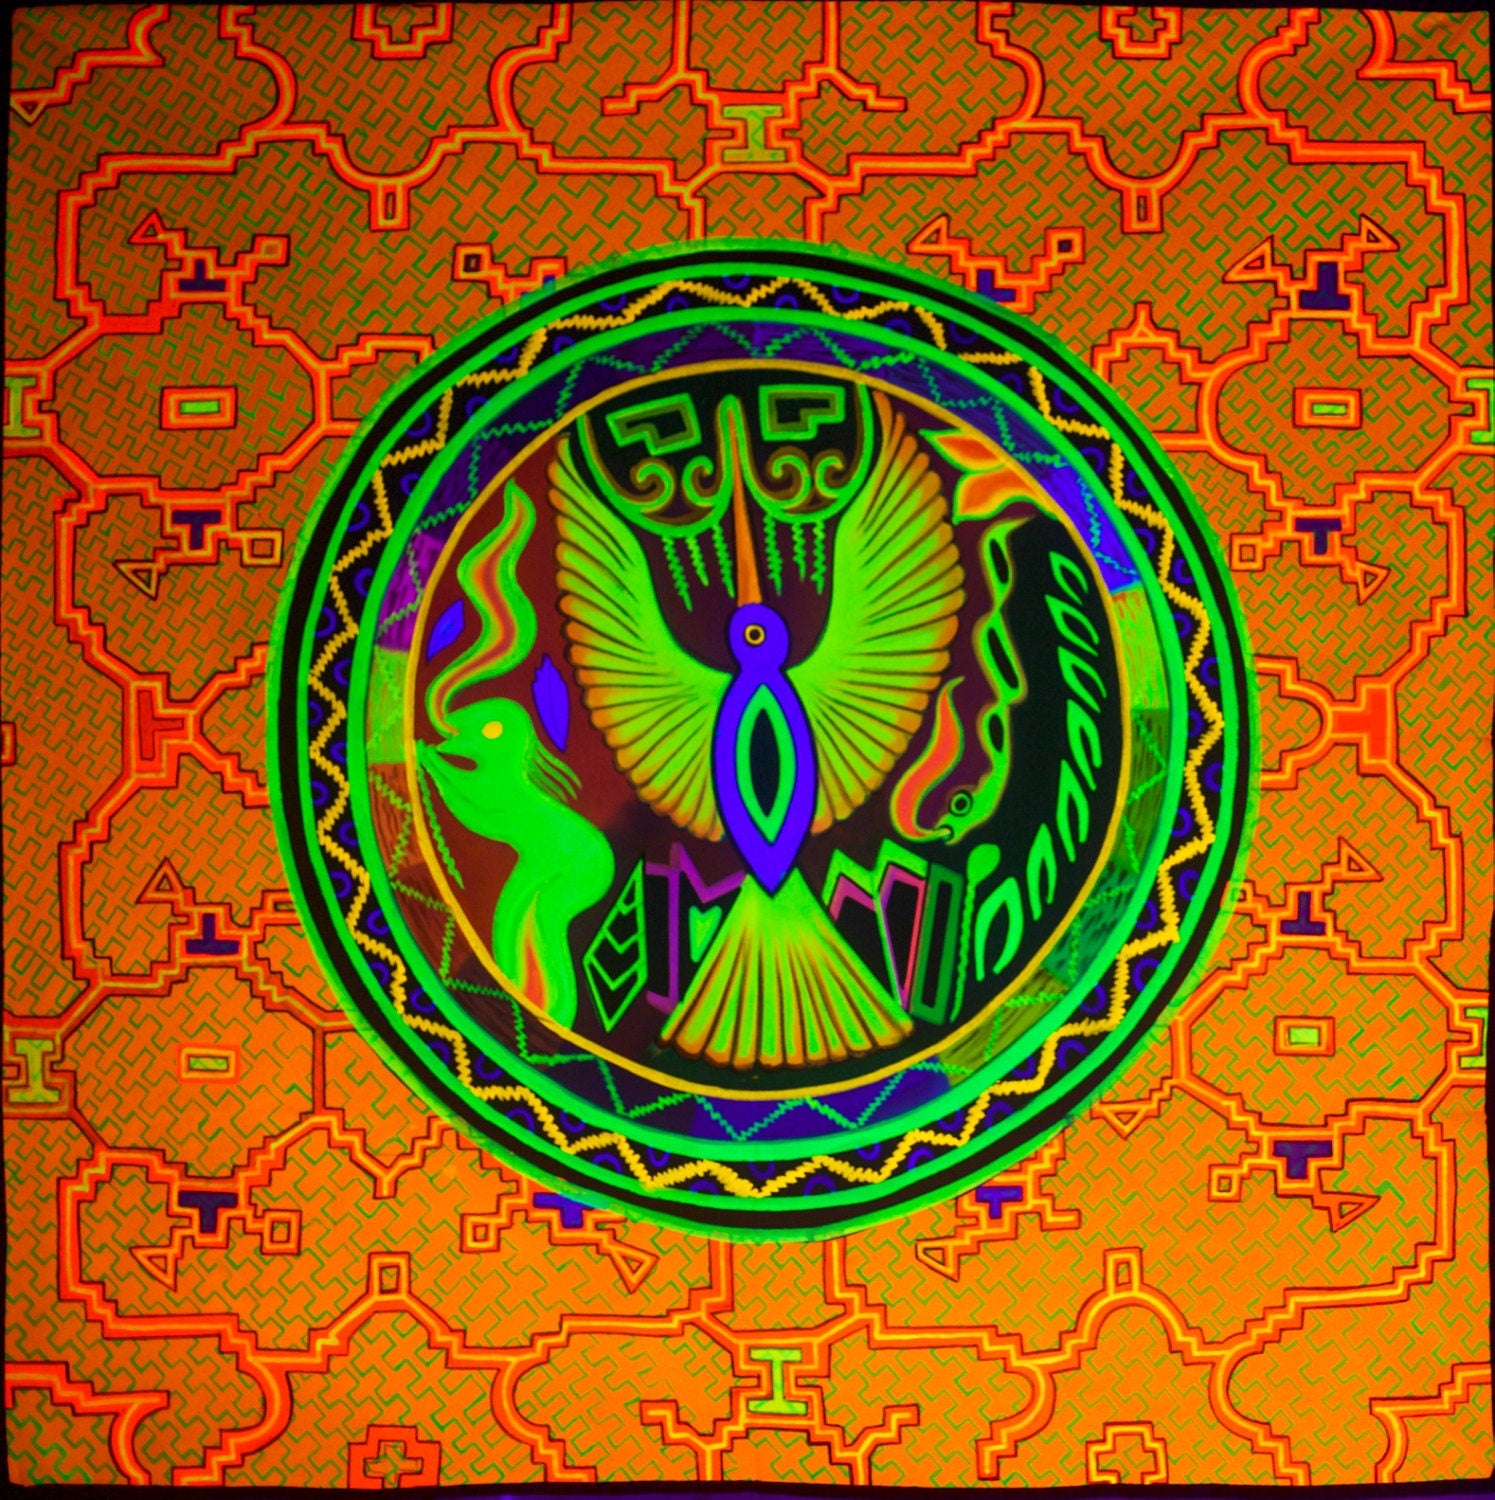 Huichol Eagle visionary art - fully blacklight glowing colors - psychedelic UV painting shipibo conibo yage artwork